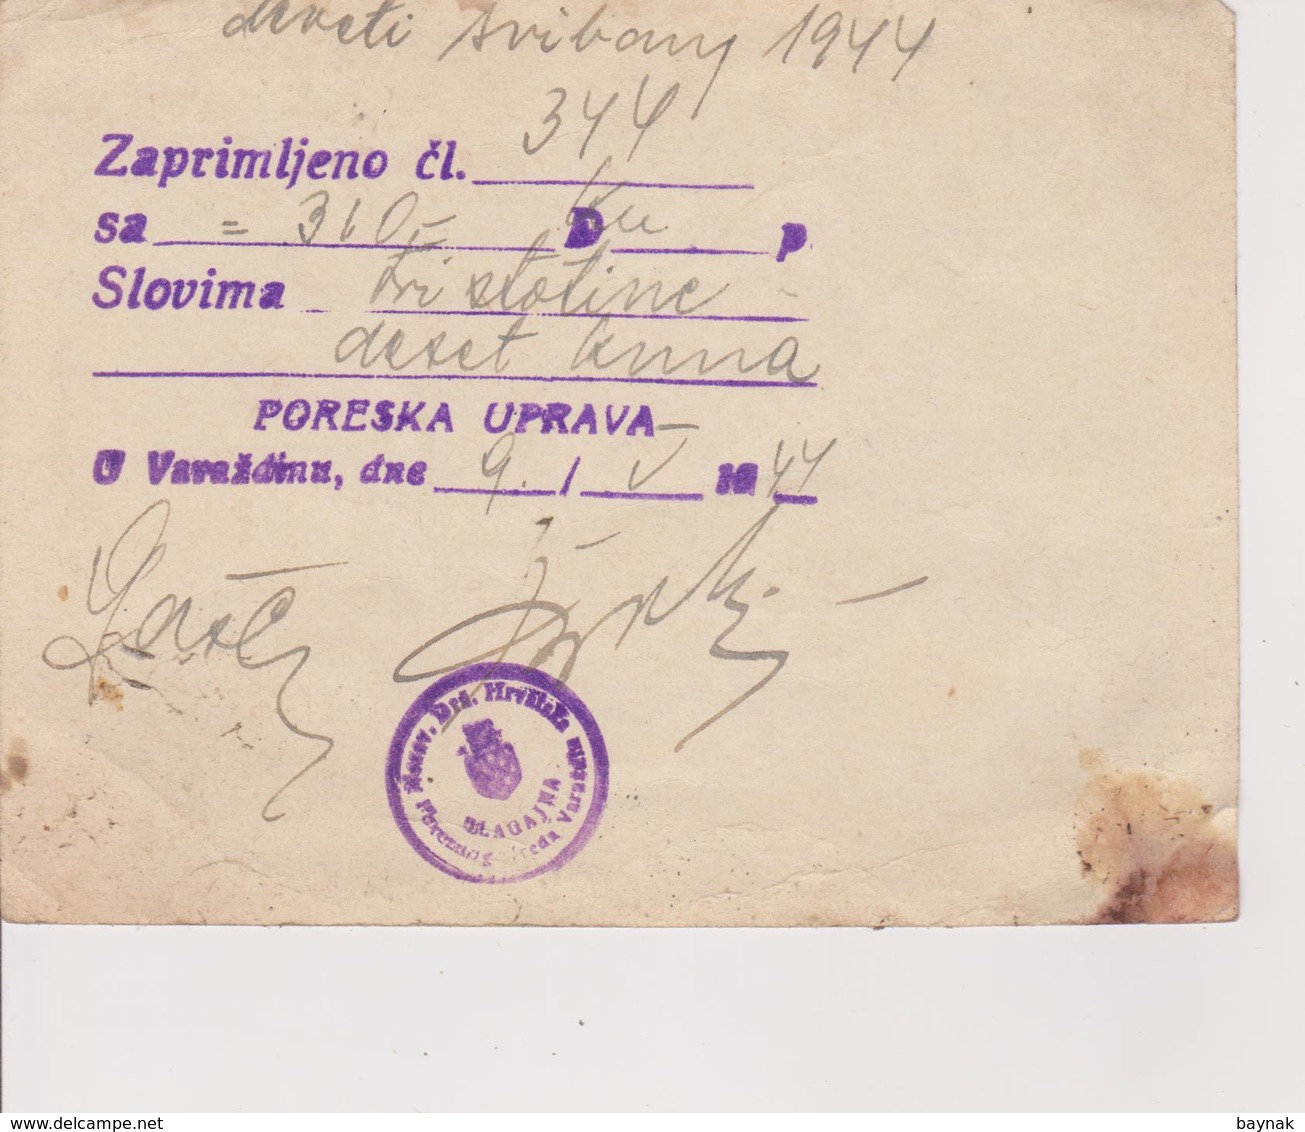 CROATIA  - KROATIEN   -  NDH,   NEZAVISNA DRZAVA HRVATSKA   ~  POREZNA KARTA  ~  STEUERKARTE, TAX CARD    ~~  1944 - Historical Documents